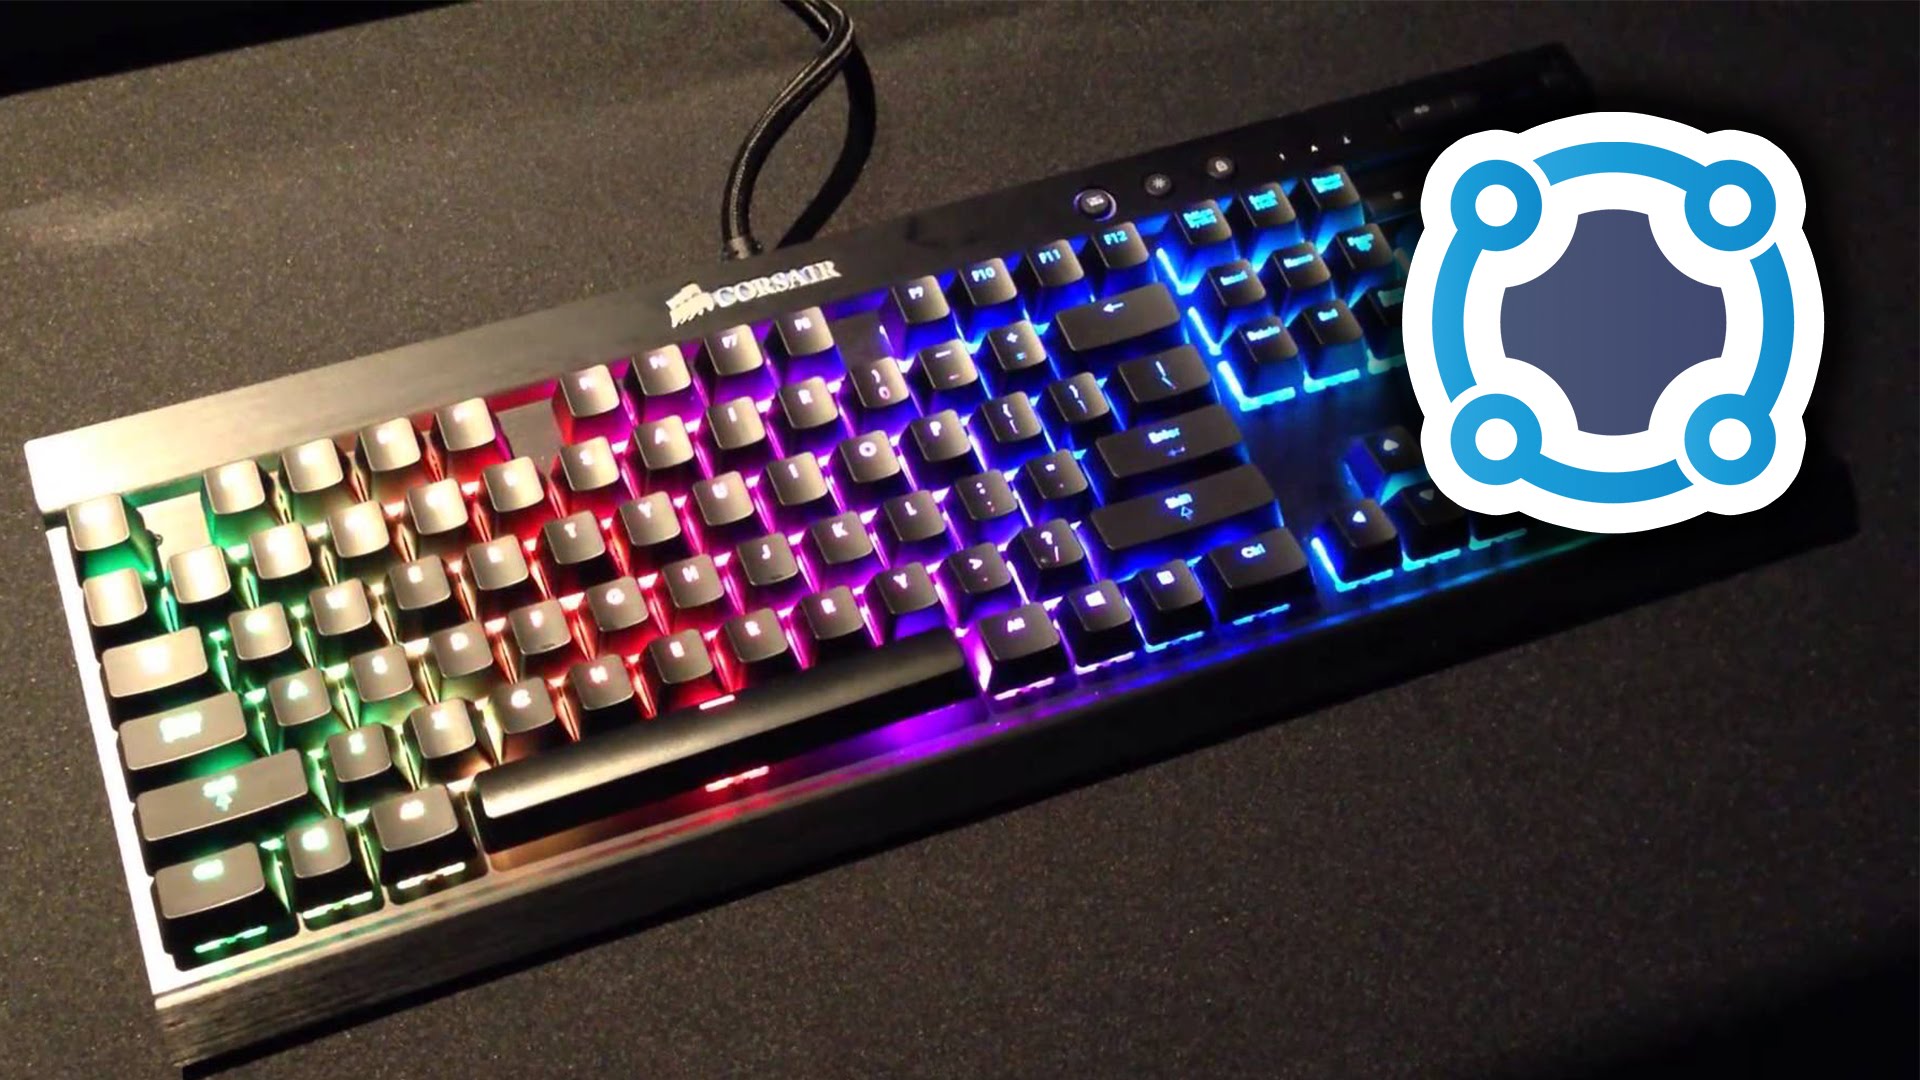 Corsair K70 RGB Gaming Keyboard Review